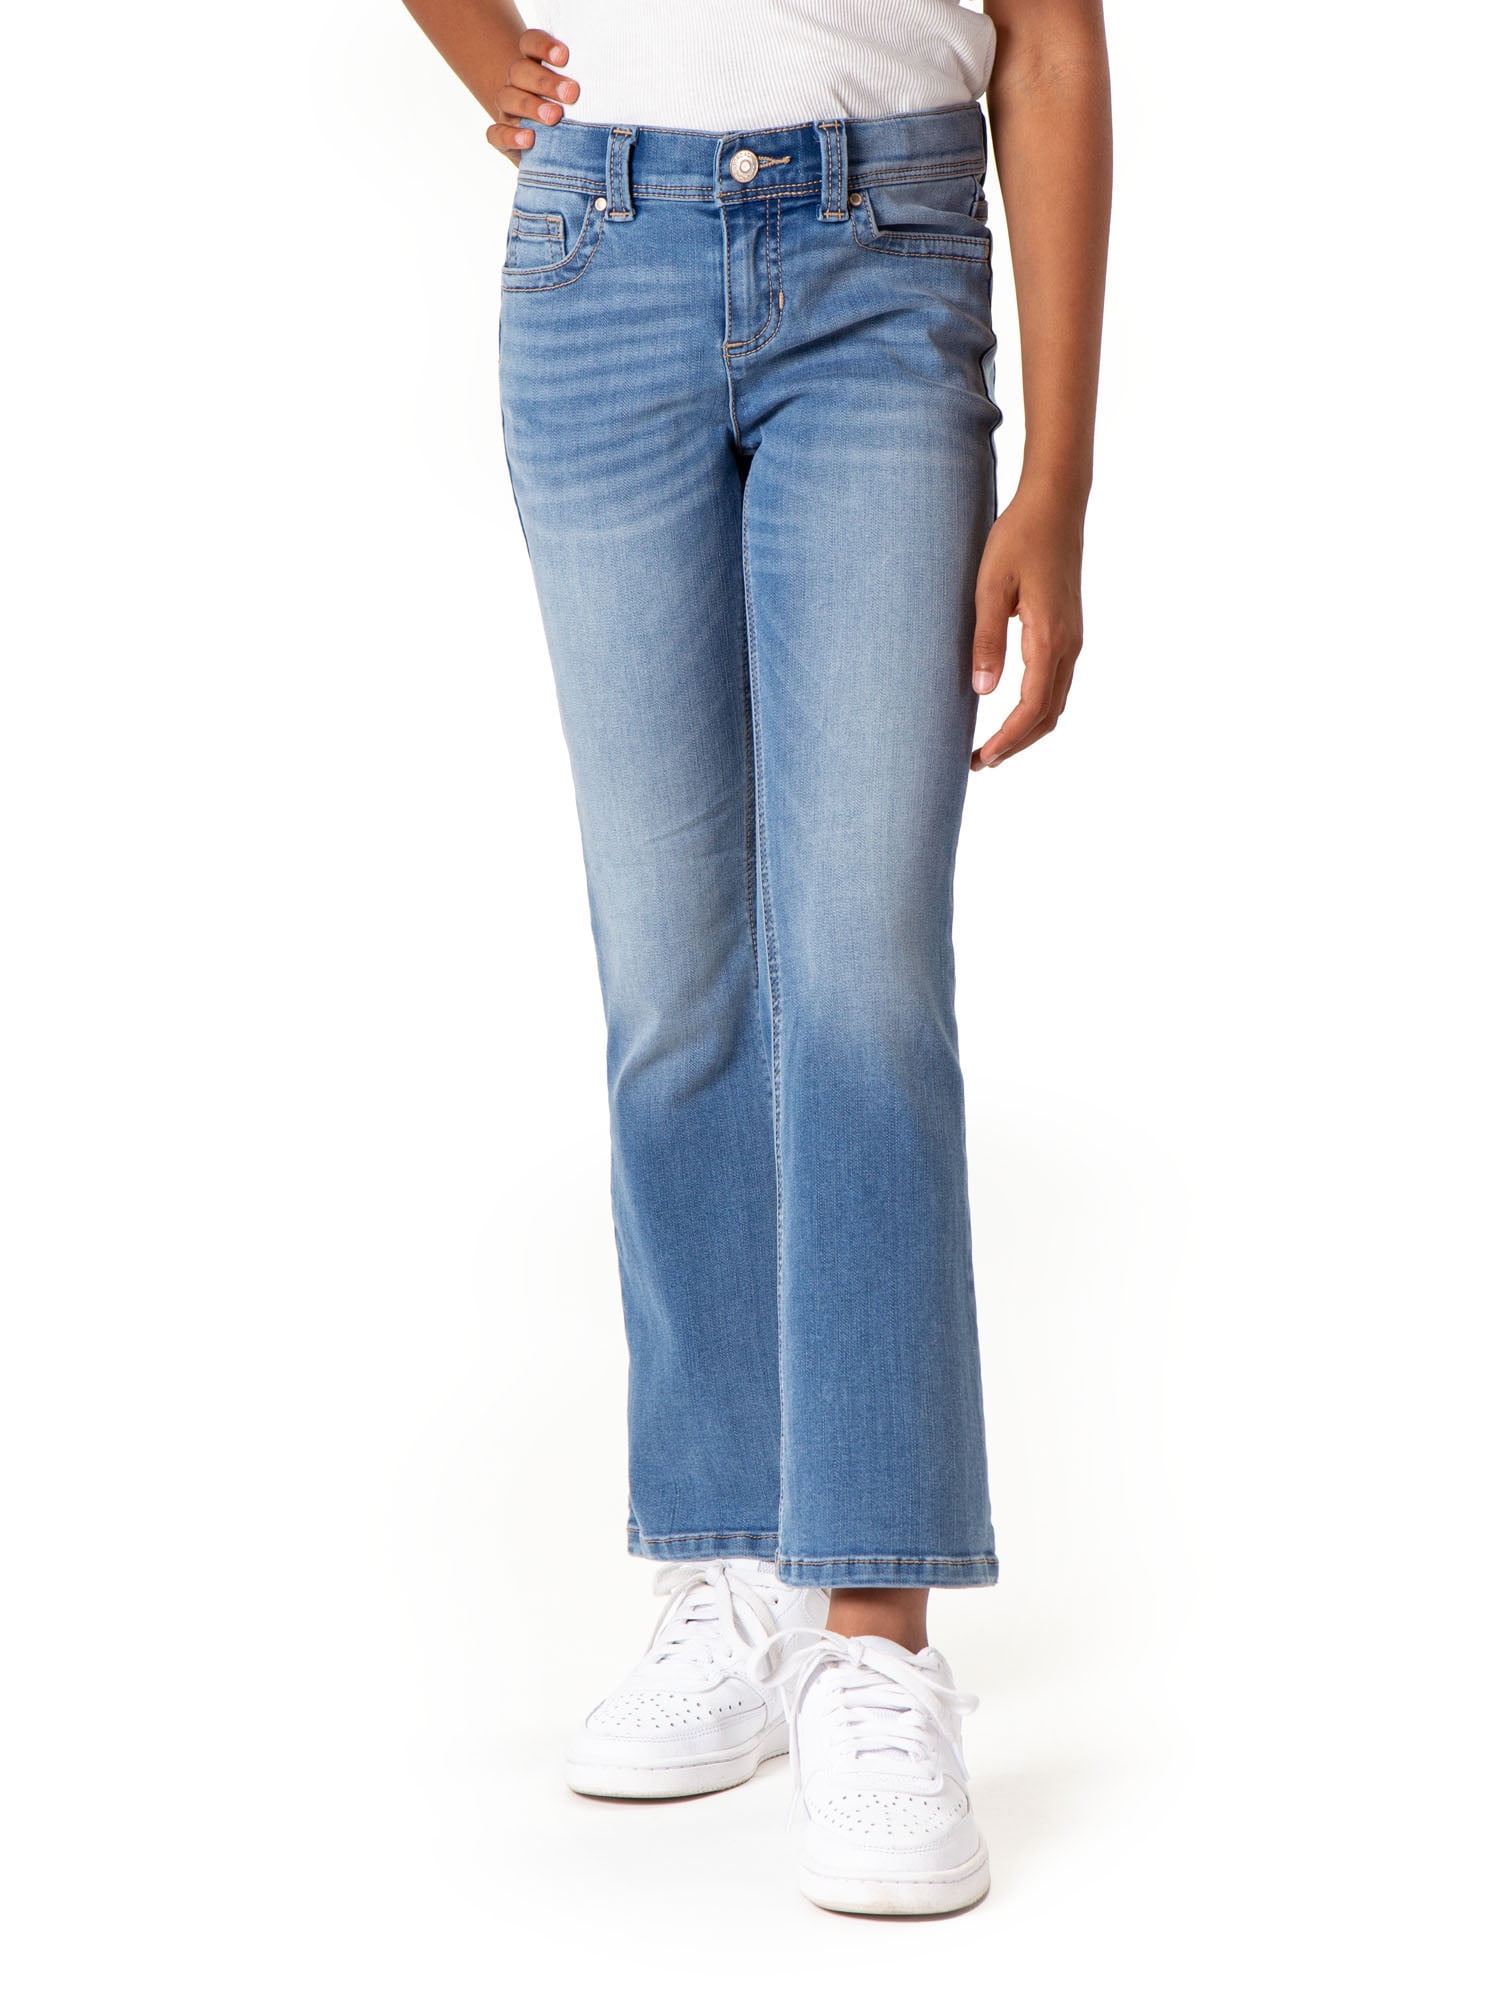 Jordache girls jeans size 7s  Girls jeans, Jeans size, Girl